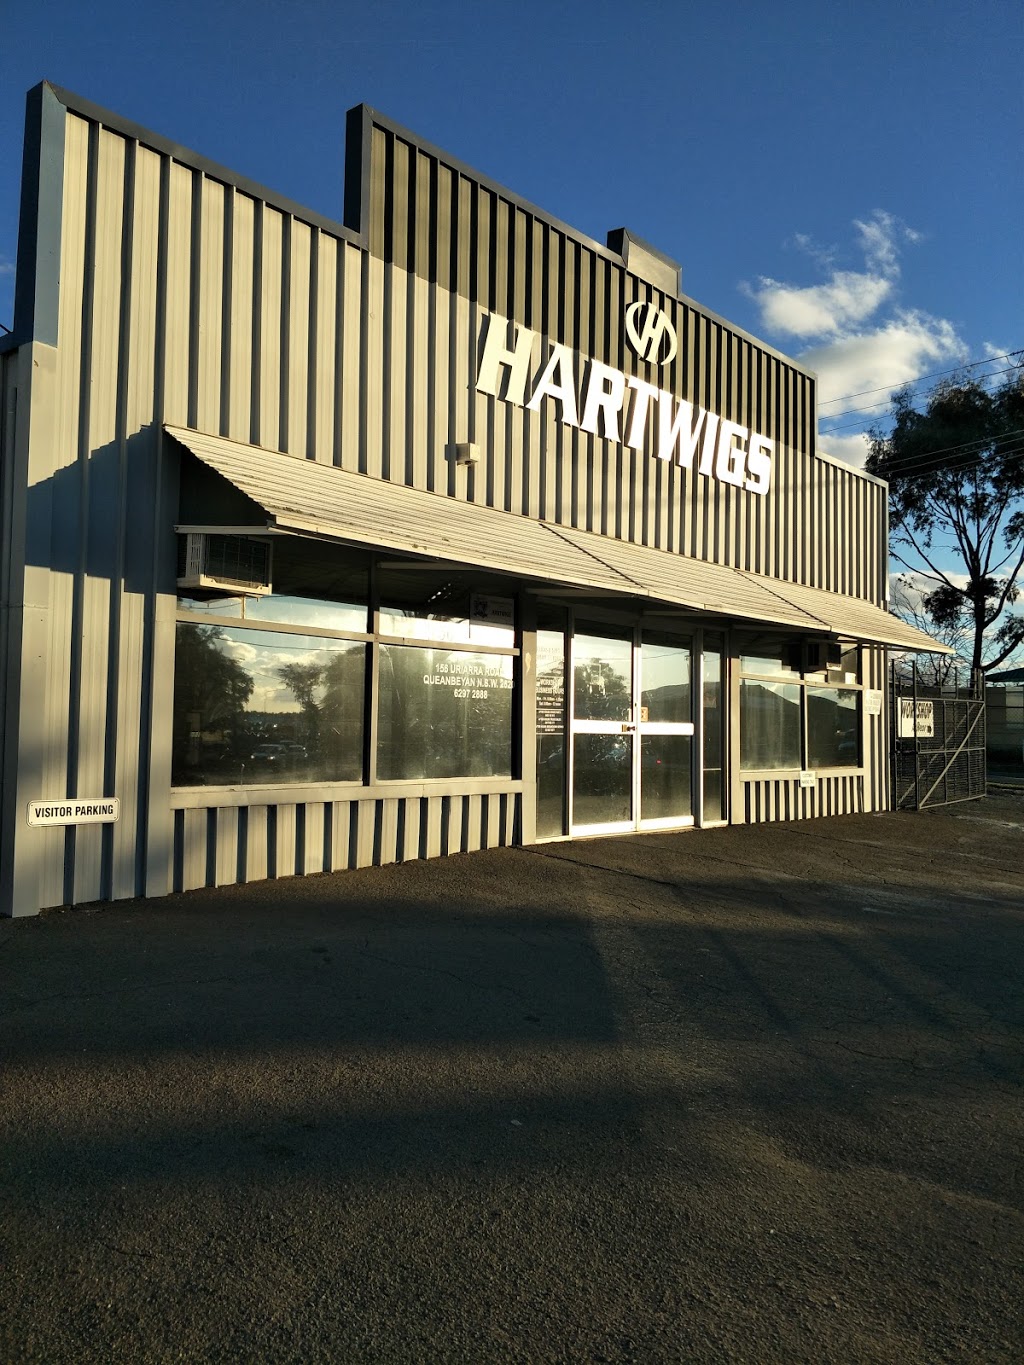 Hartwigs | car repair | 156 Uriarra Rd, Crestwood NSW 2620, Australia | 0262972888 OR +61 2 6297 2888